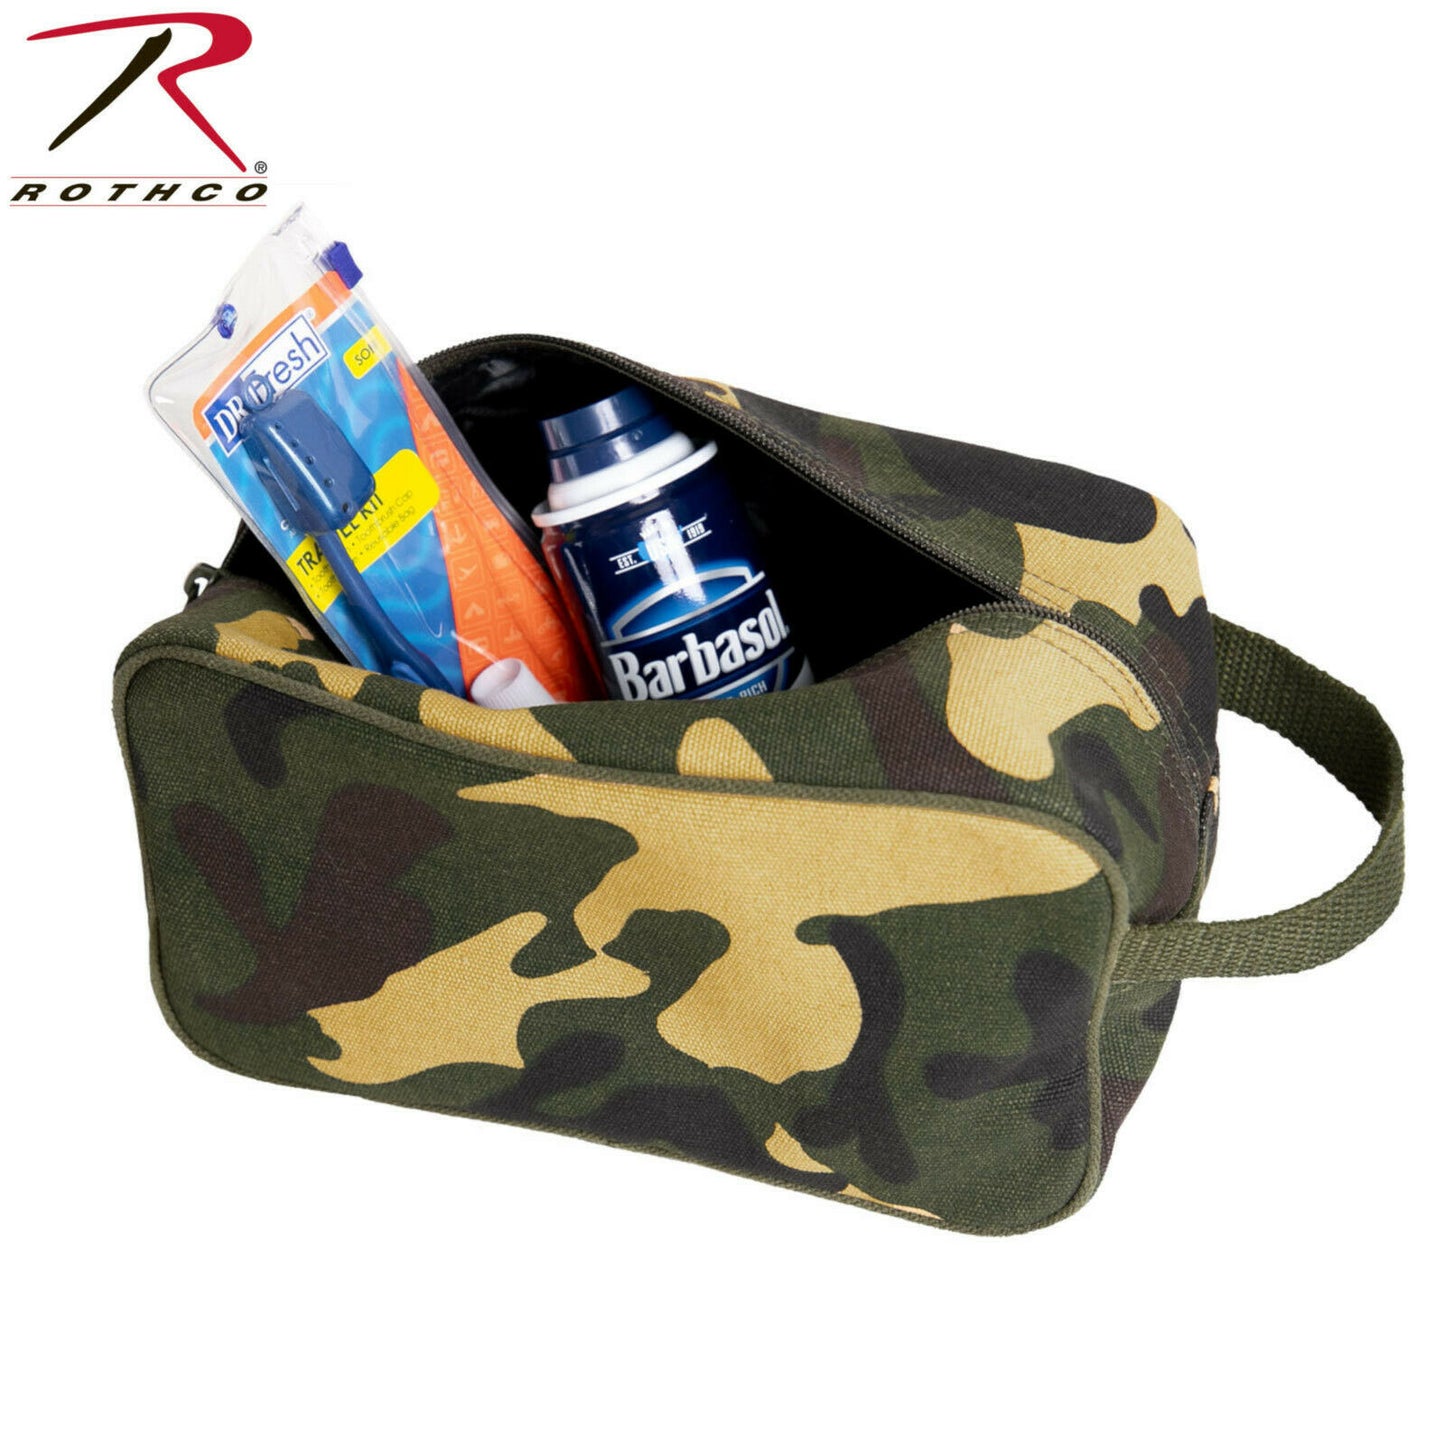 Rothco Heavyweight Canvas Camo Travel Kit - Camouflage Toiletry Travel Bag